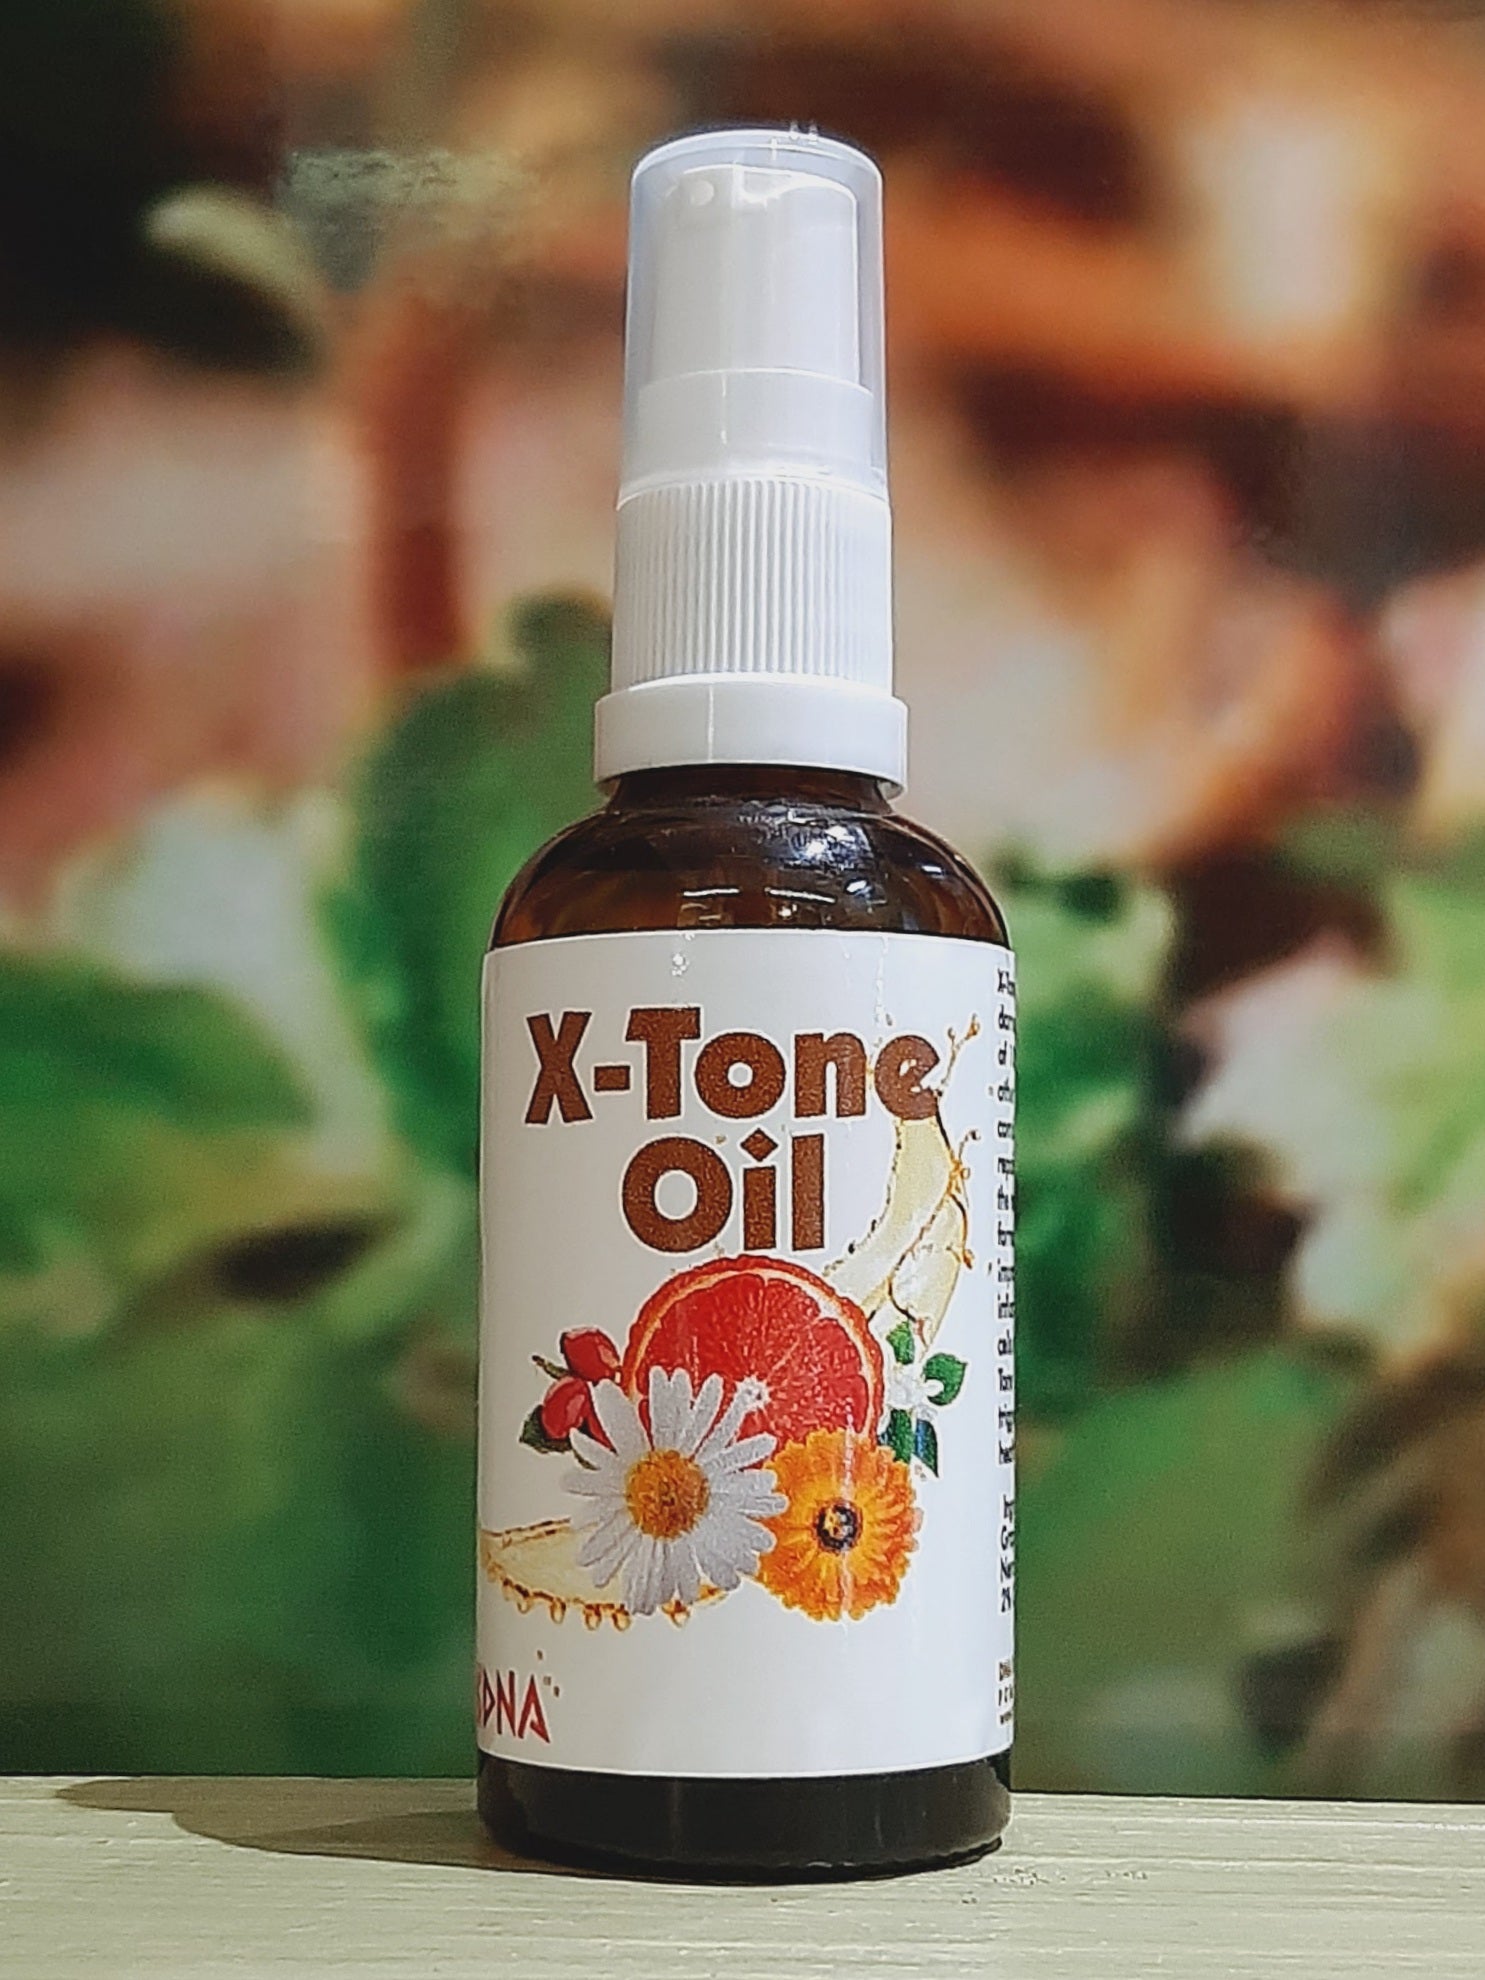 DNA Xtone oil 50ml